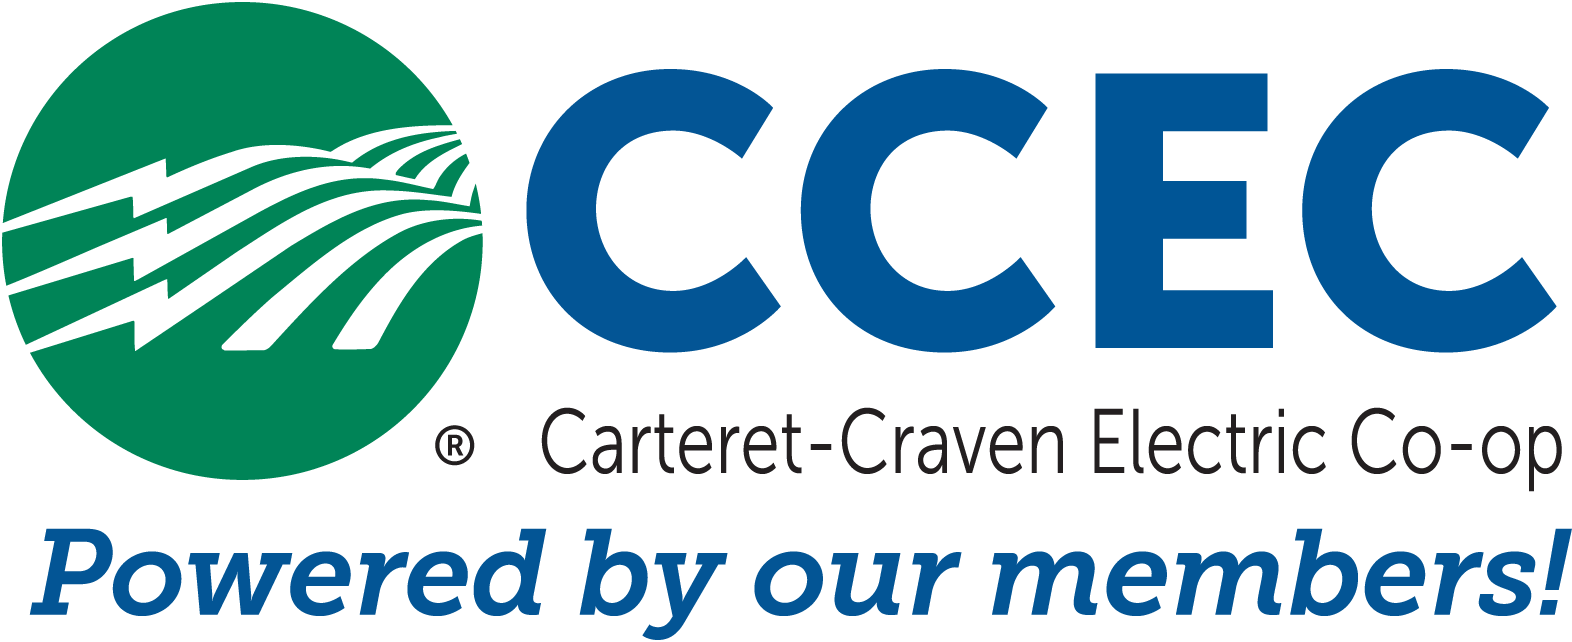 Carteret-Craven Electric Cooperative logo